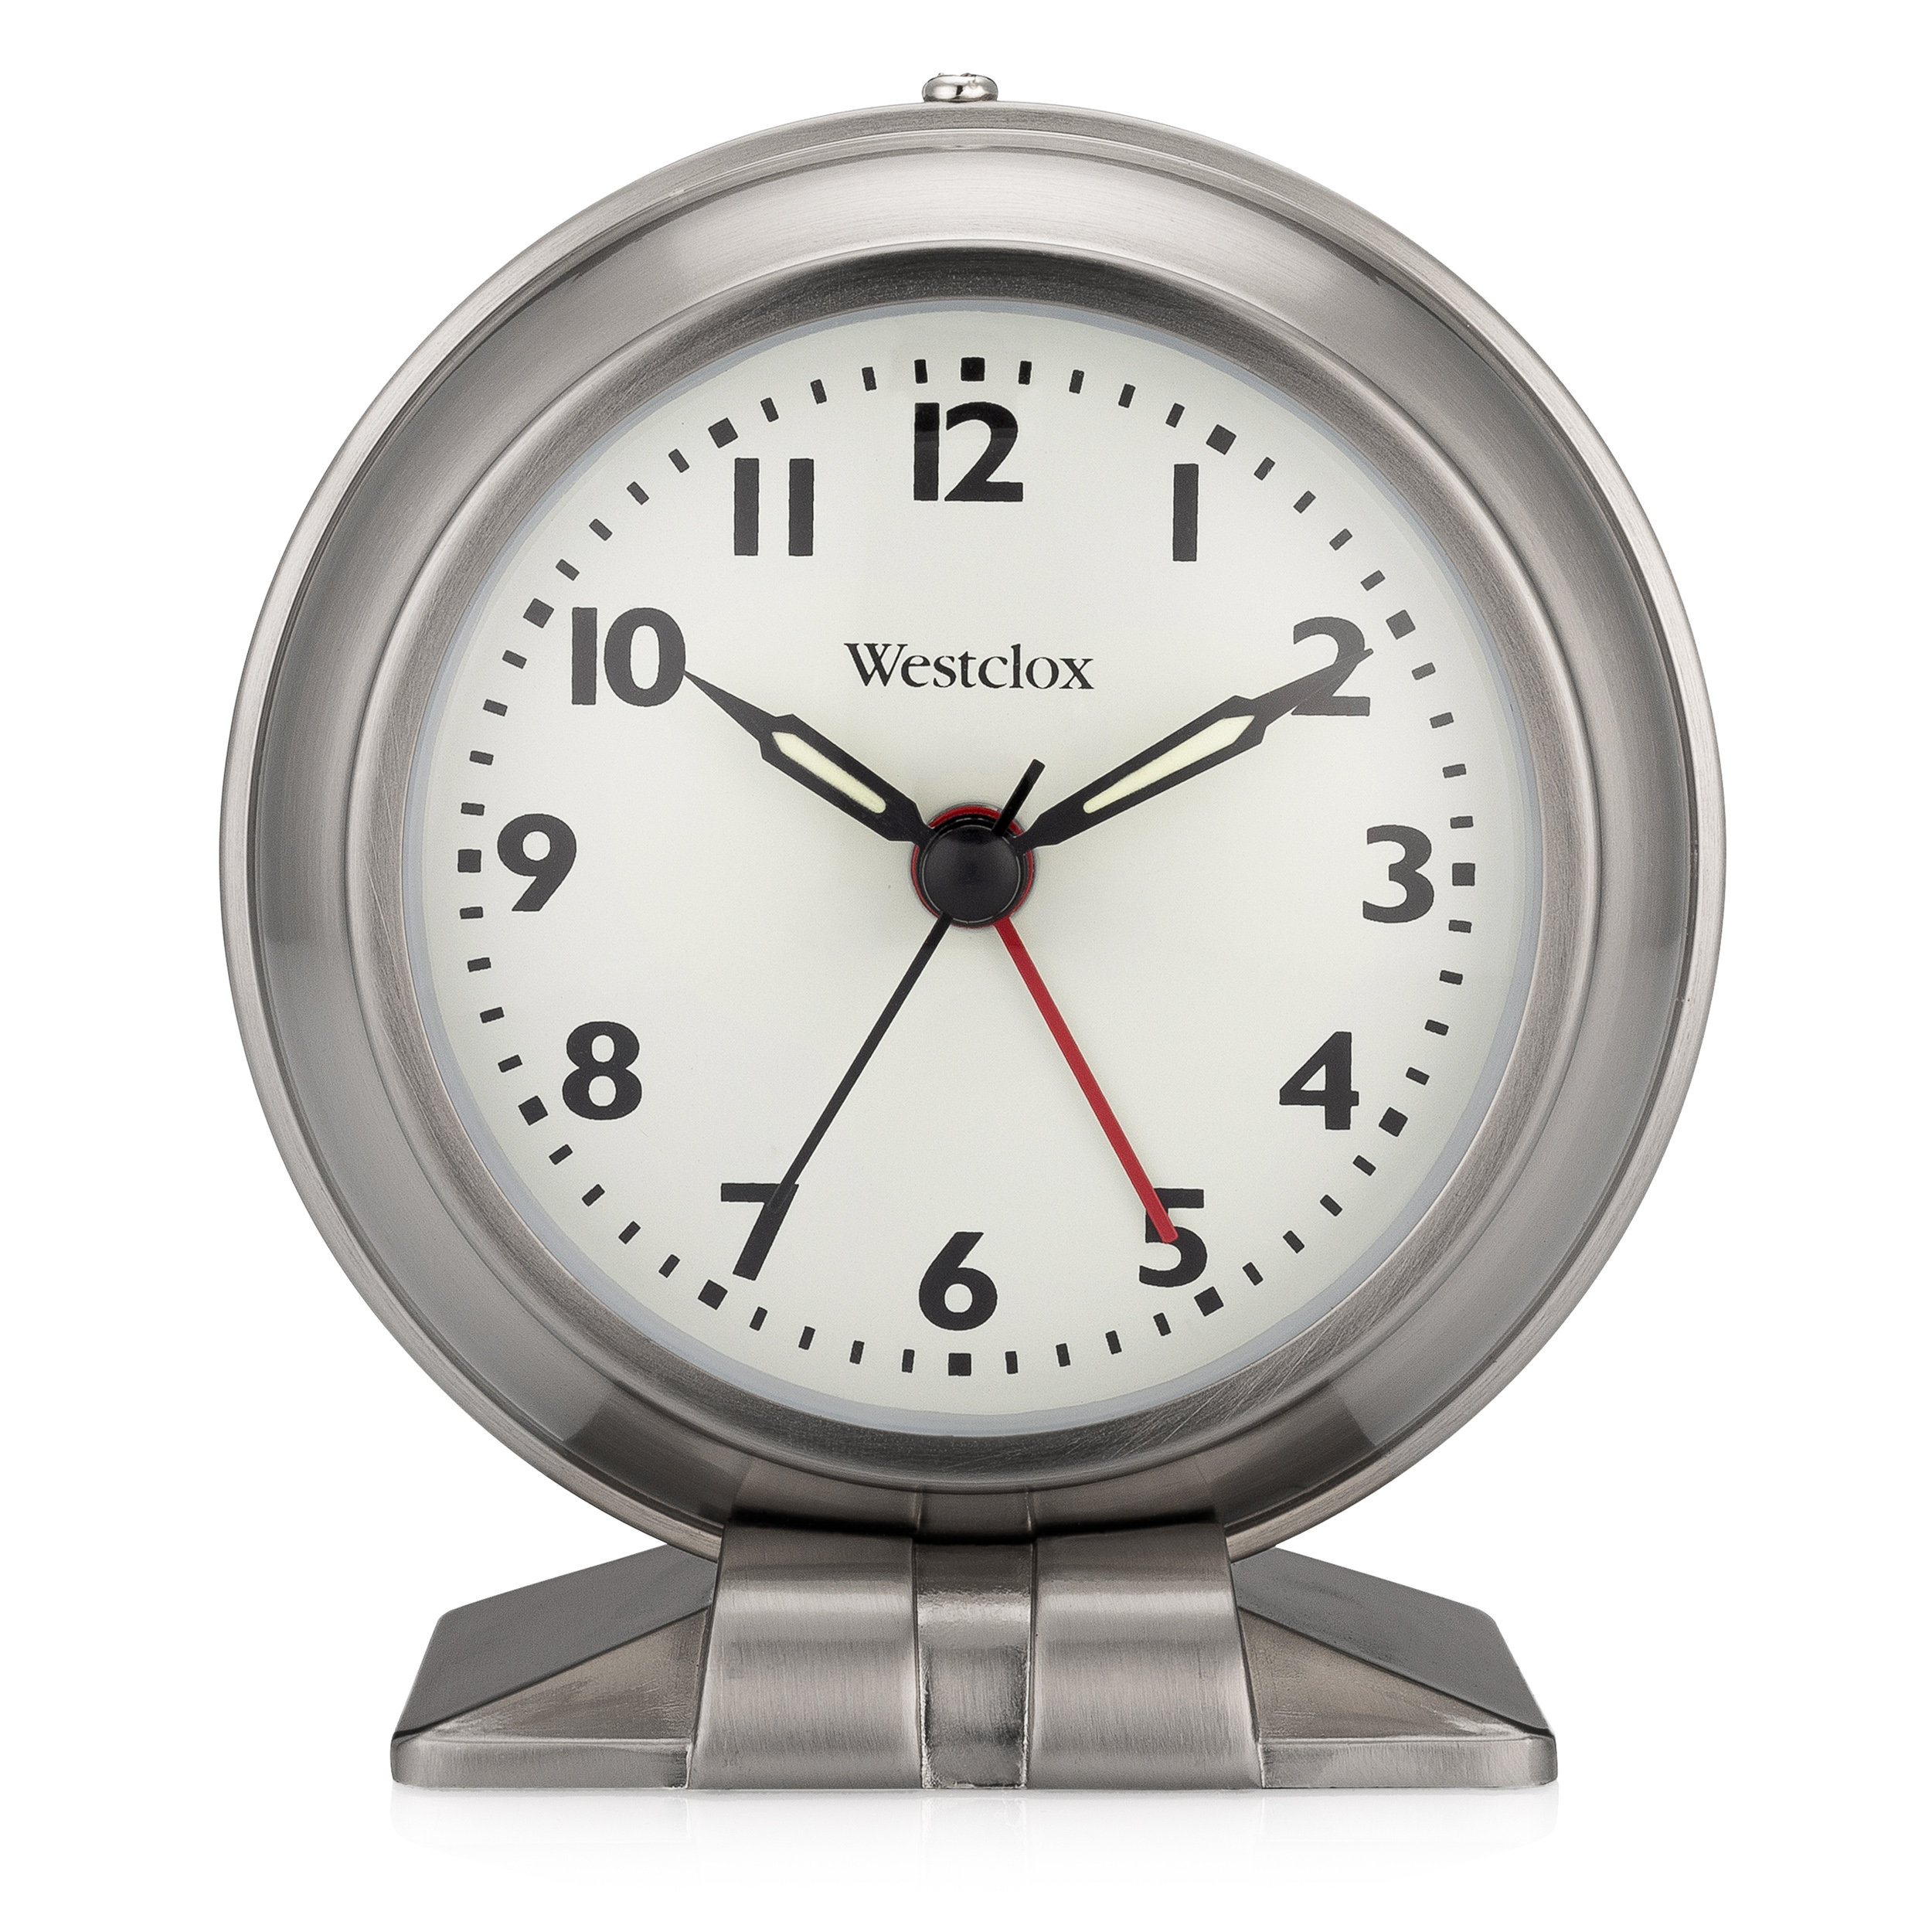 leerling Ontwapening winter Darby Home Co Modern & Contemporary NumericalAnalog Quartz Alarm Tabletop  Clock in Brushed Nickel & Reviews | Wayfair